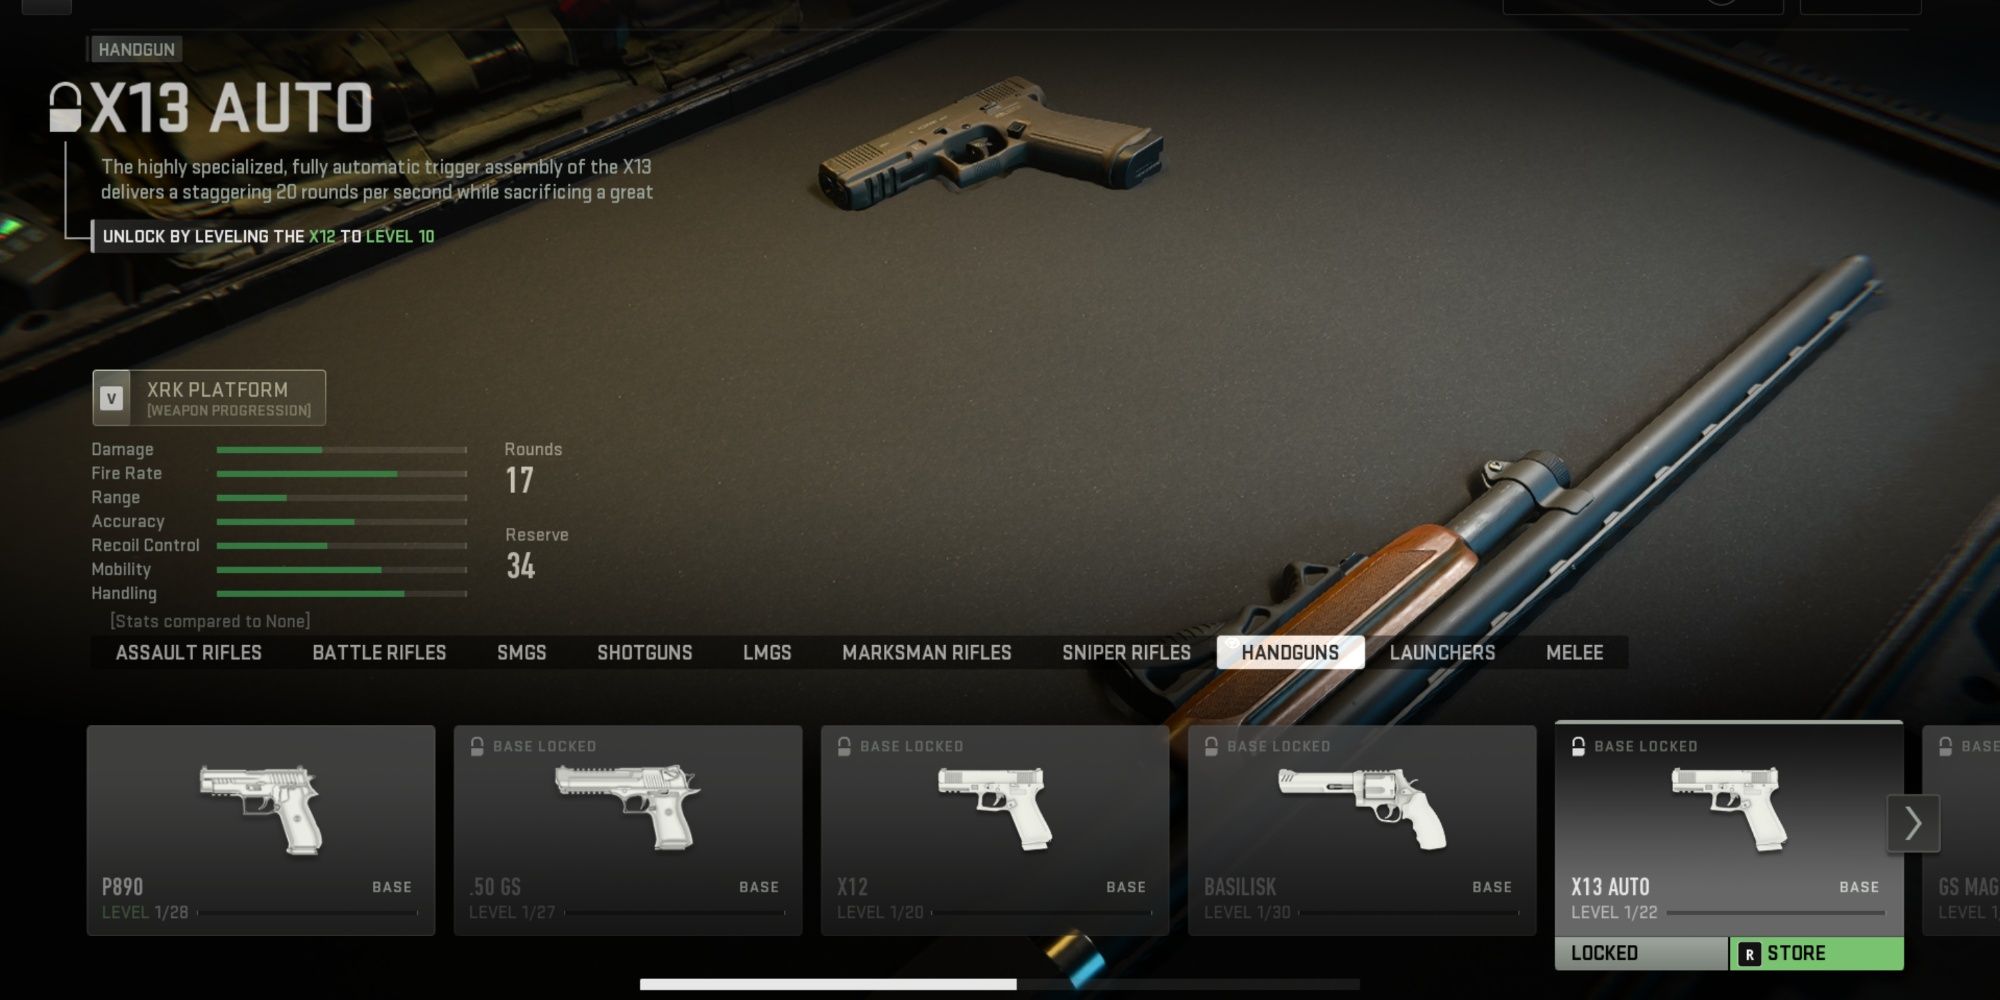 X13 Auto Handgun Call of Duty Warzone Mobile Ranked-1